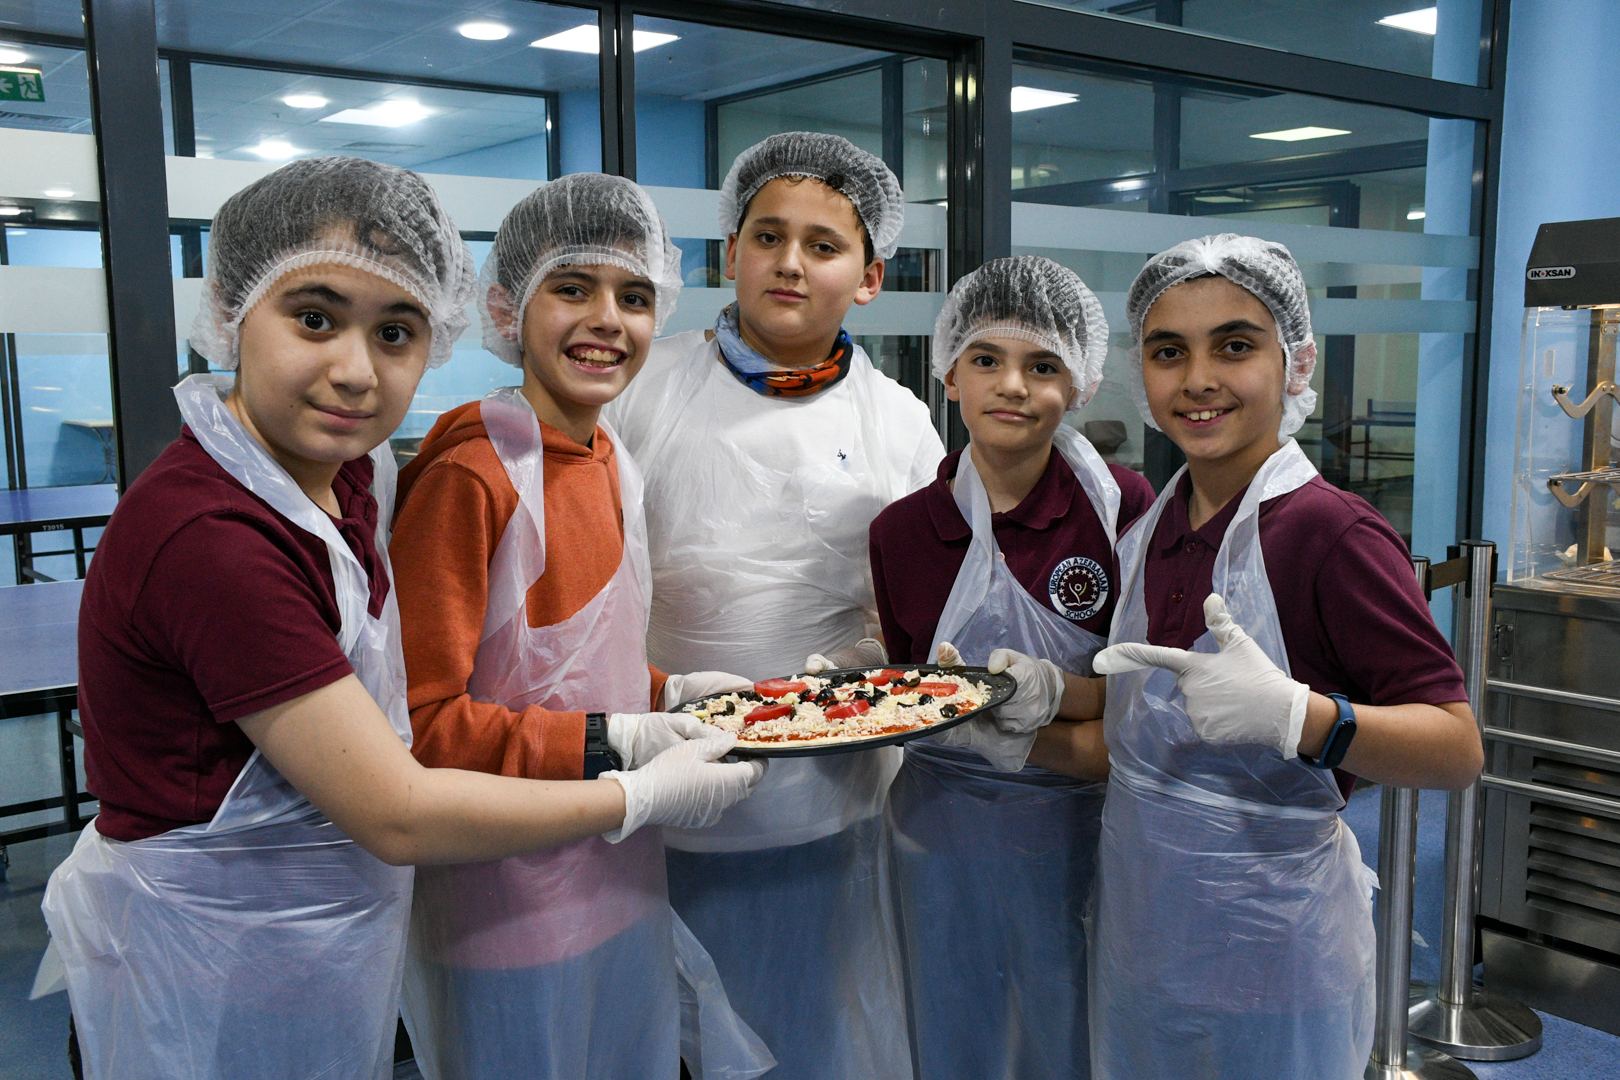 Nutrition Day held at European Azerbaijan School (PHOTO)